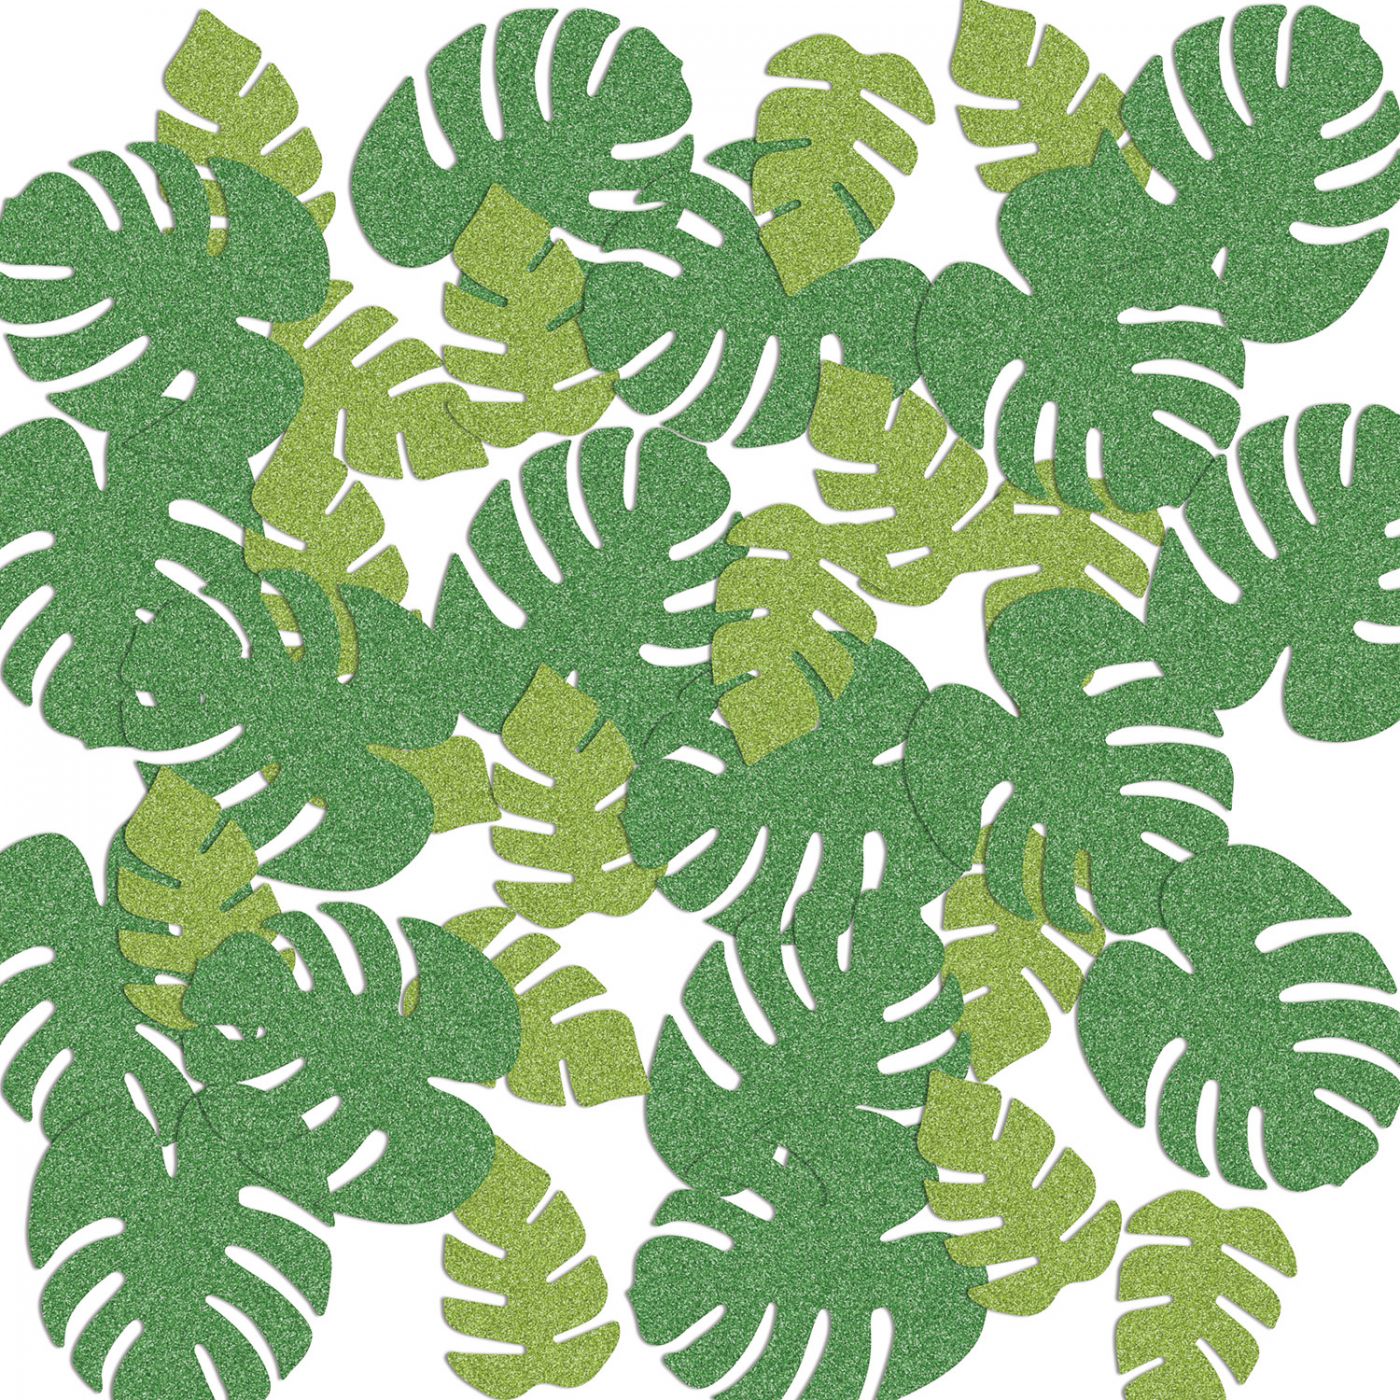 Tropical Palm Leaf Del Sparkle Confetti (12) image